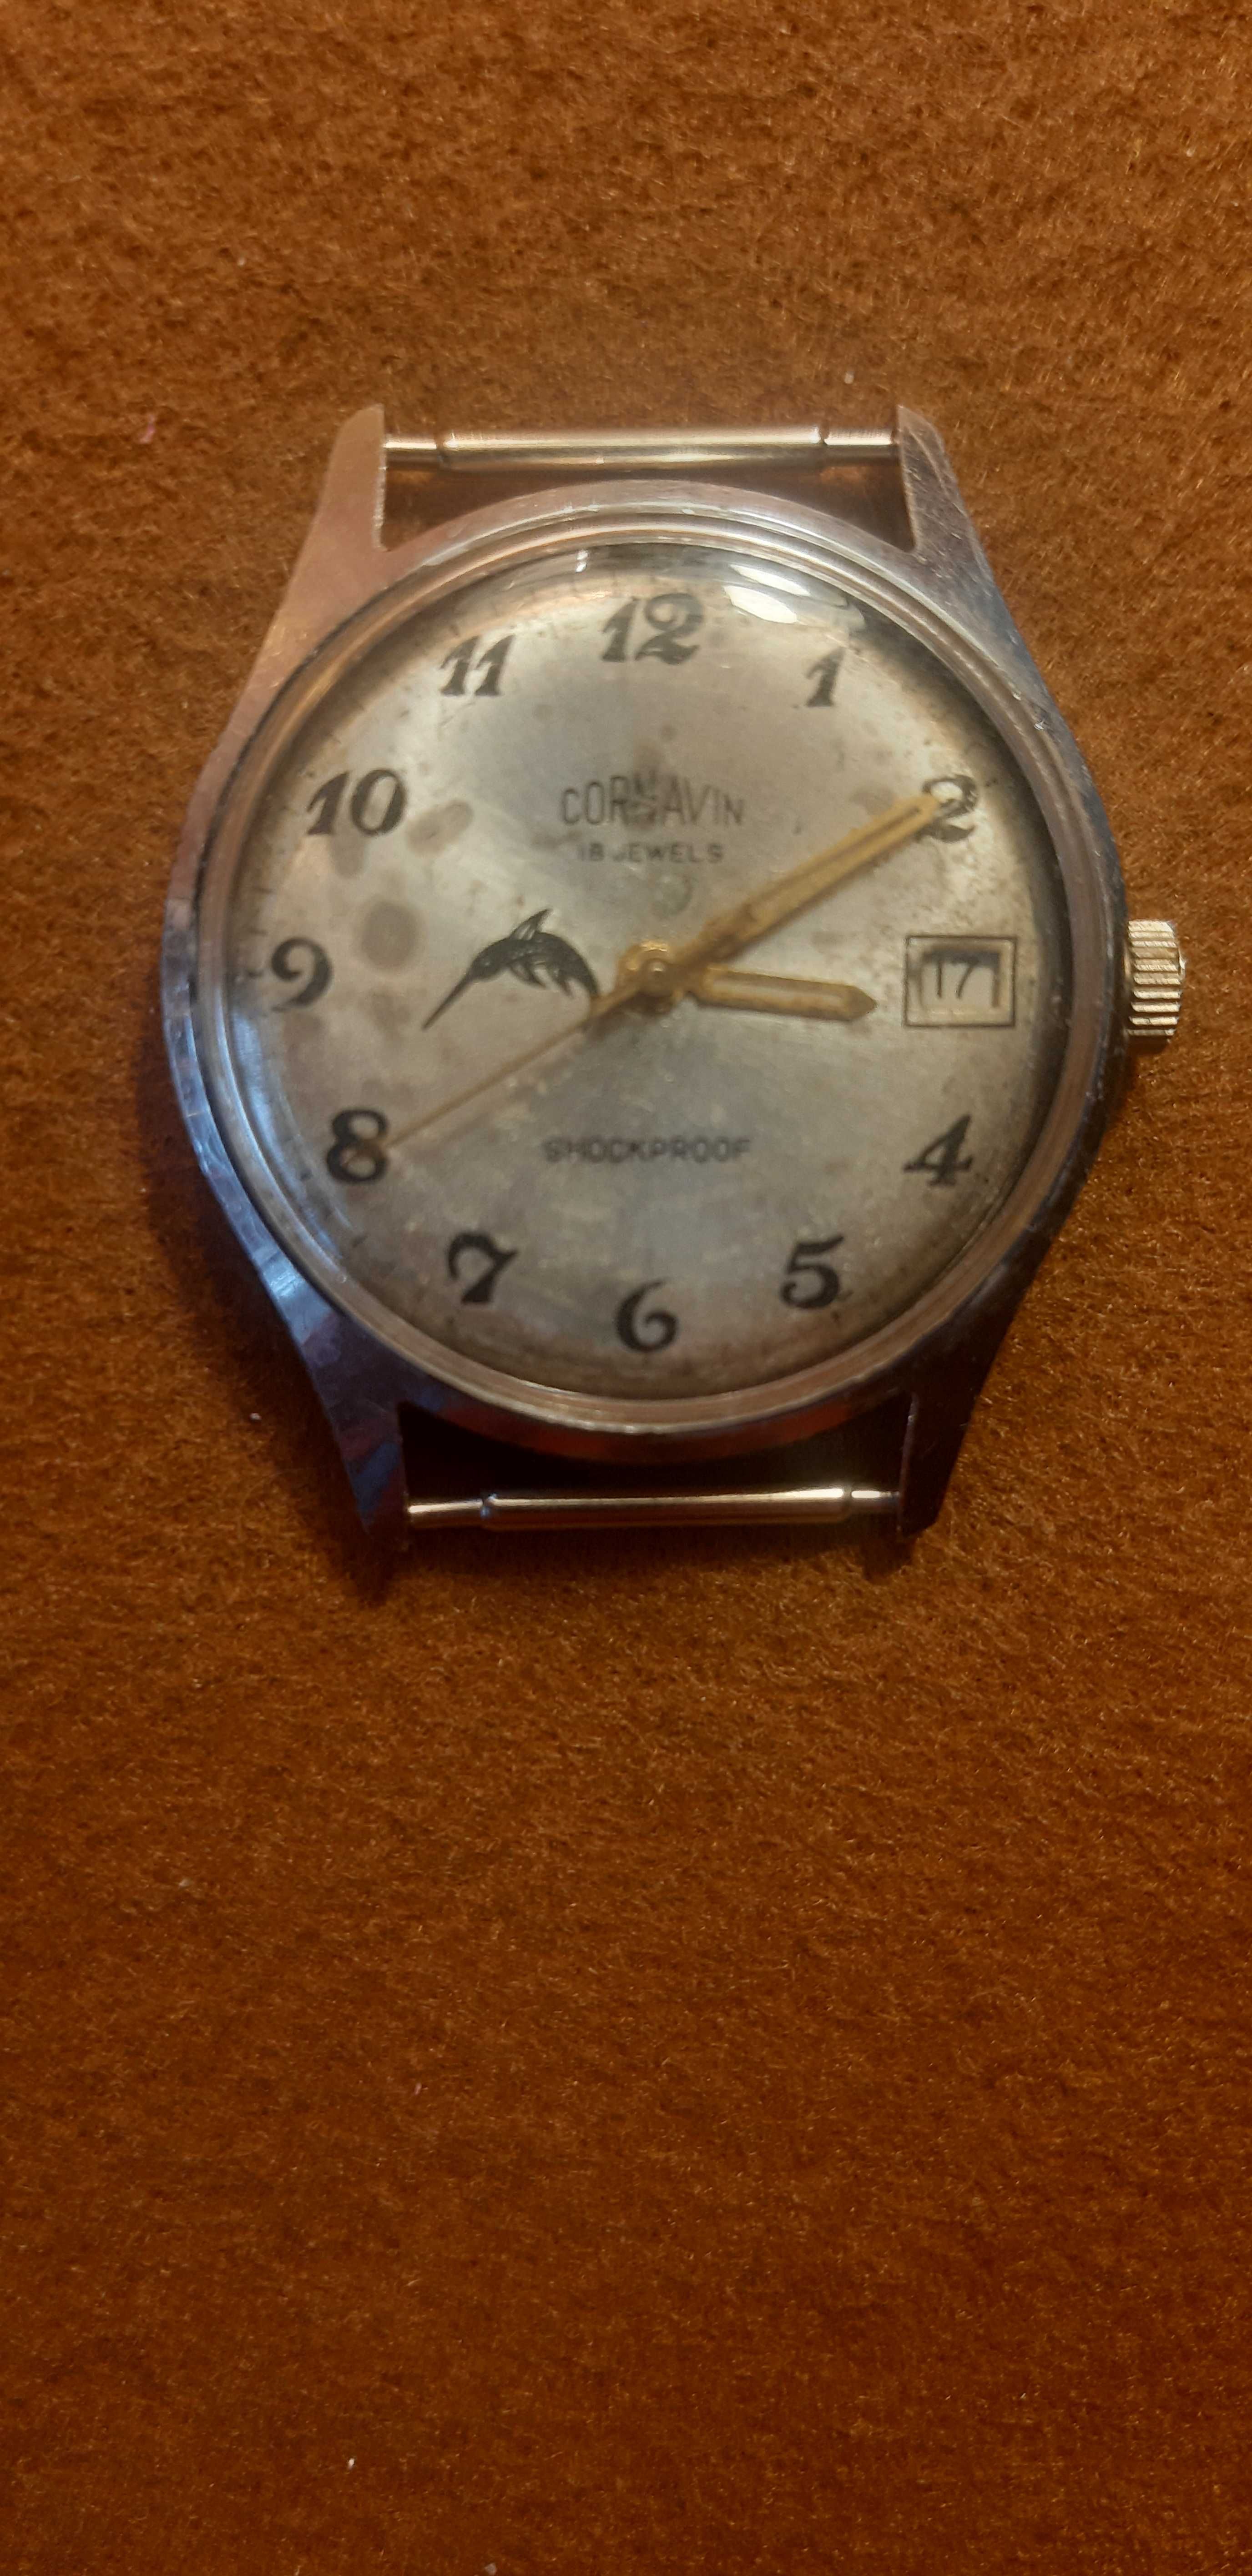 Часы Cornavin 18 jewels  на ходу советского периода